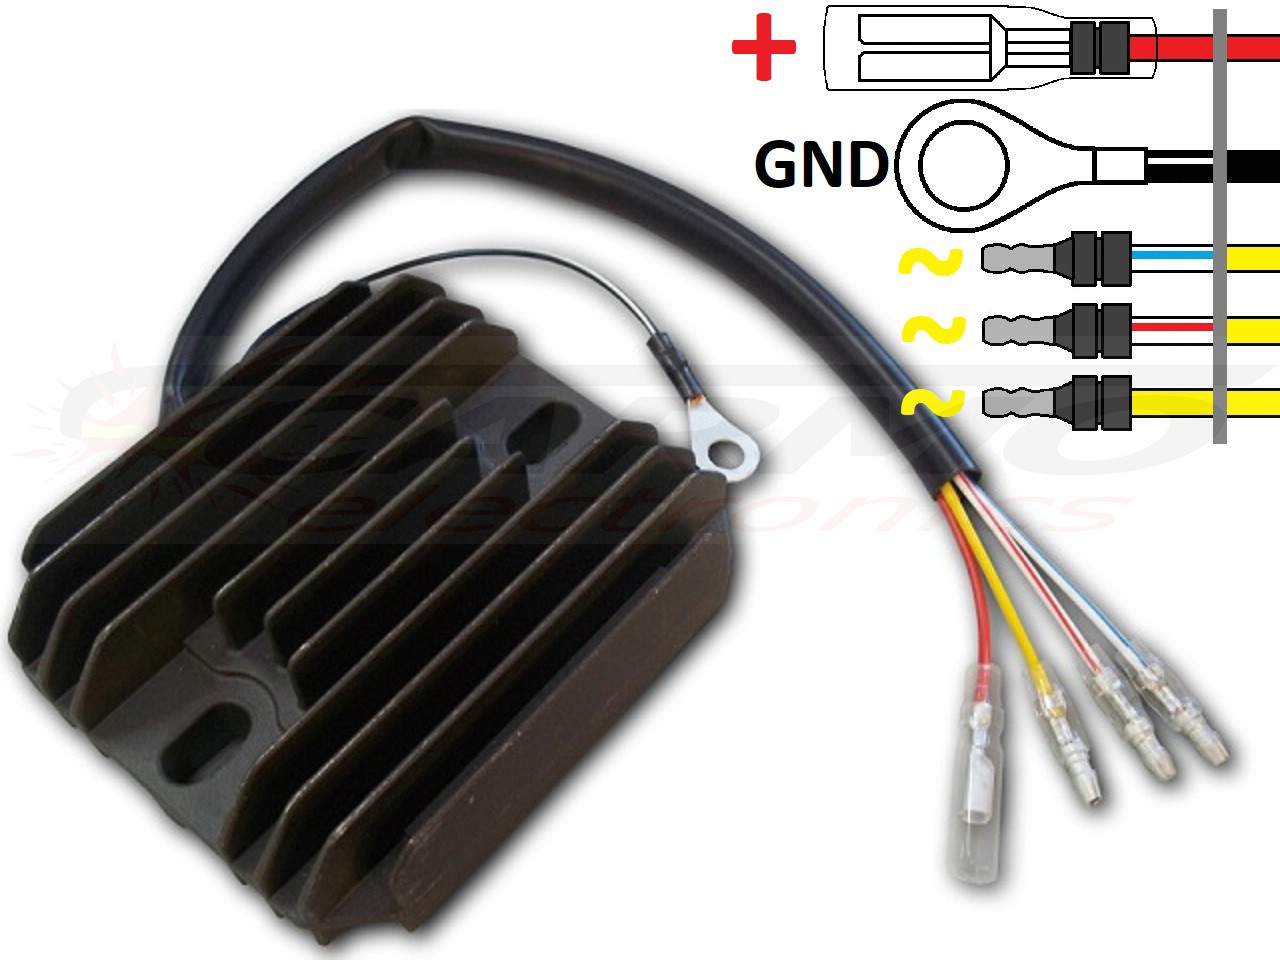 CARR101 - Suzuki GS MOSFET Spanningsregelaar gelijkrichter (32800-45210, 32500-49010, RS21) - Clique na Imagem para Fechar